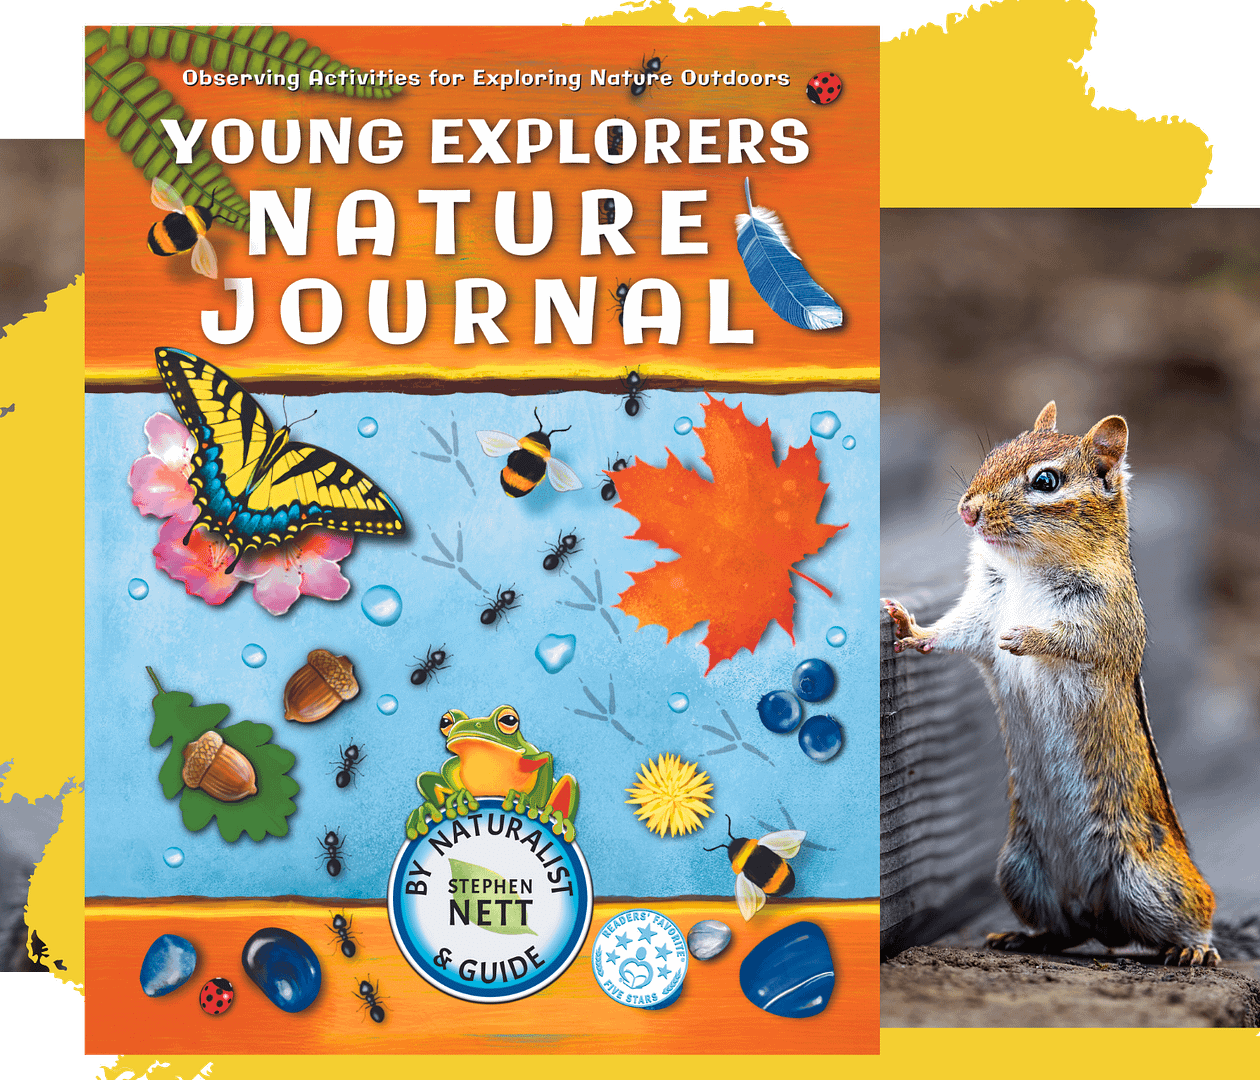 Young explorers nature journal children's outdoor activity book by naturalist Stephen Nett